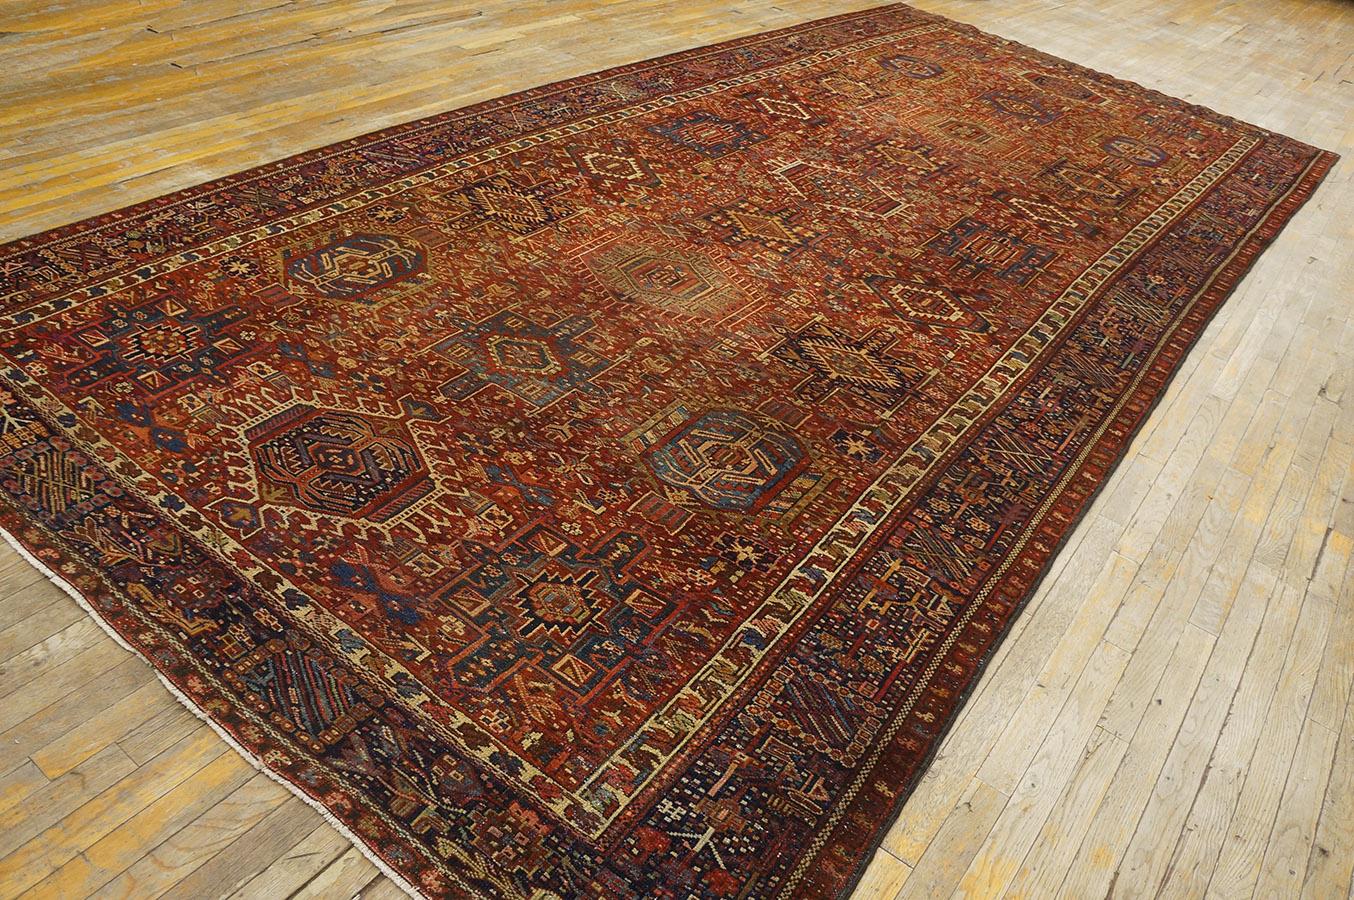 Antique Persian Karajeh rug, size: 7' 4'' x 16' 0''.